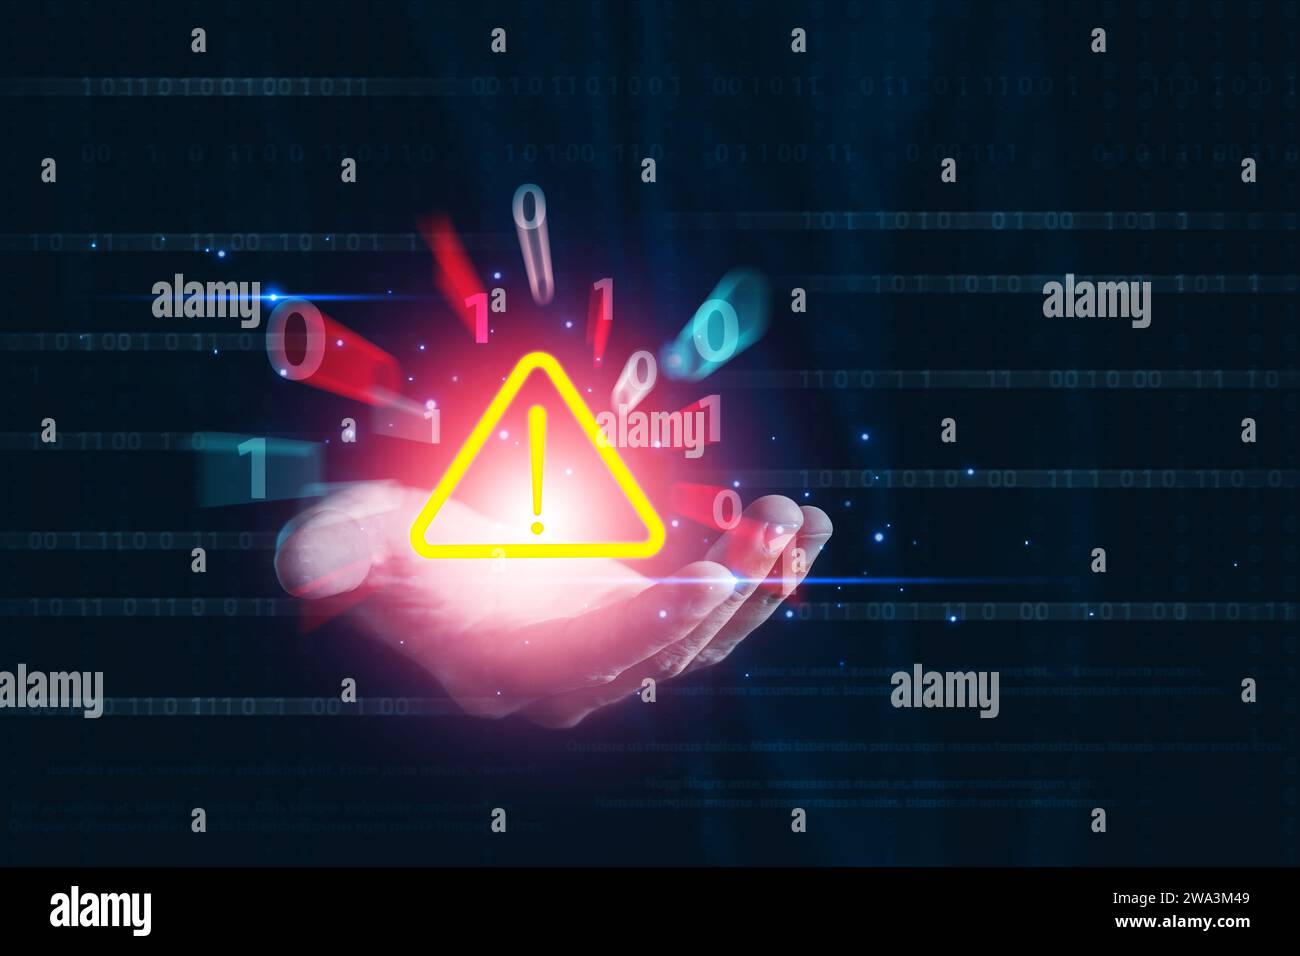 System hacked warning alert, Cyberattack computer network, Cybersecurity, Notification error maintenance, Virus cybercrime, Identity theft, Data Stock Photo